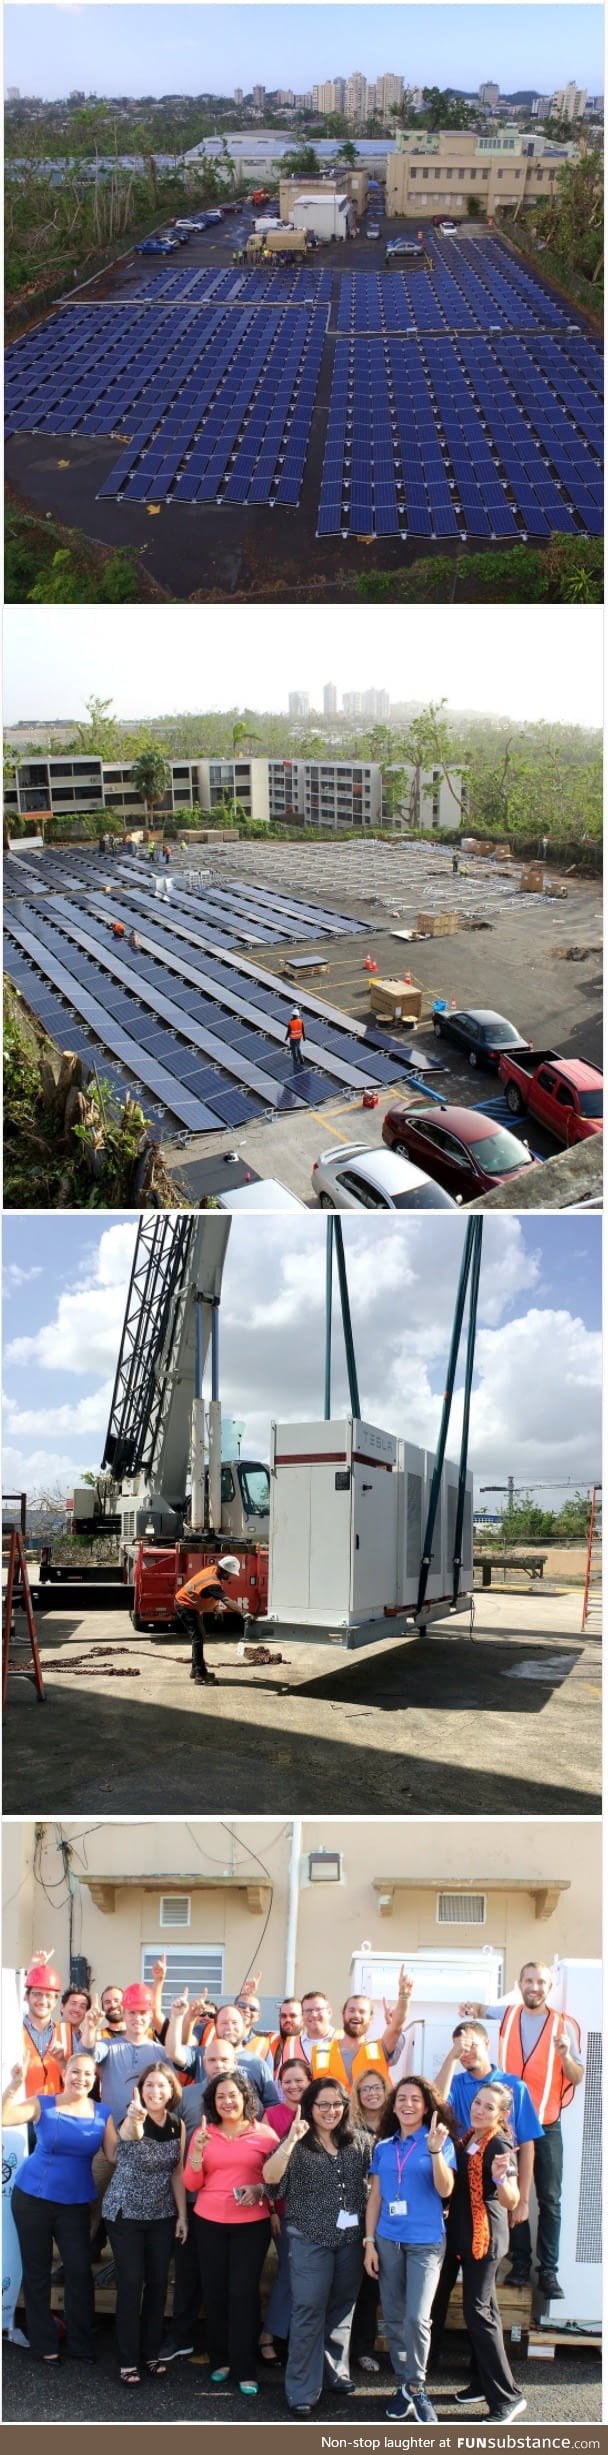 NEWS: Telsa's solar panels going live in Puerto Rico